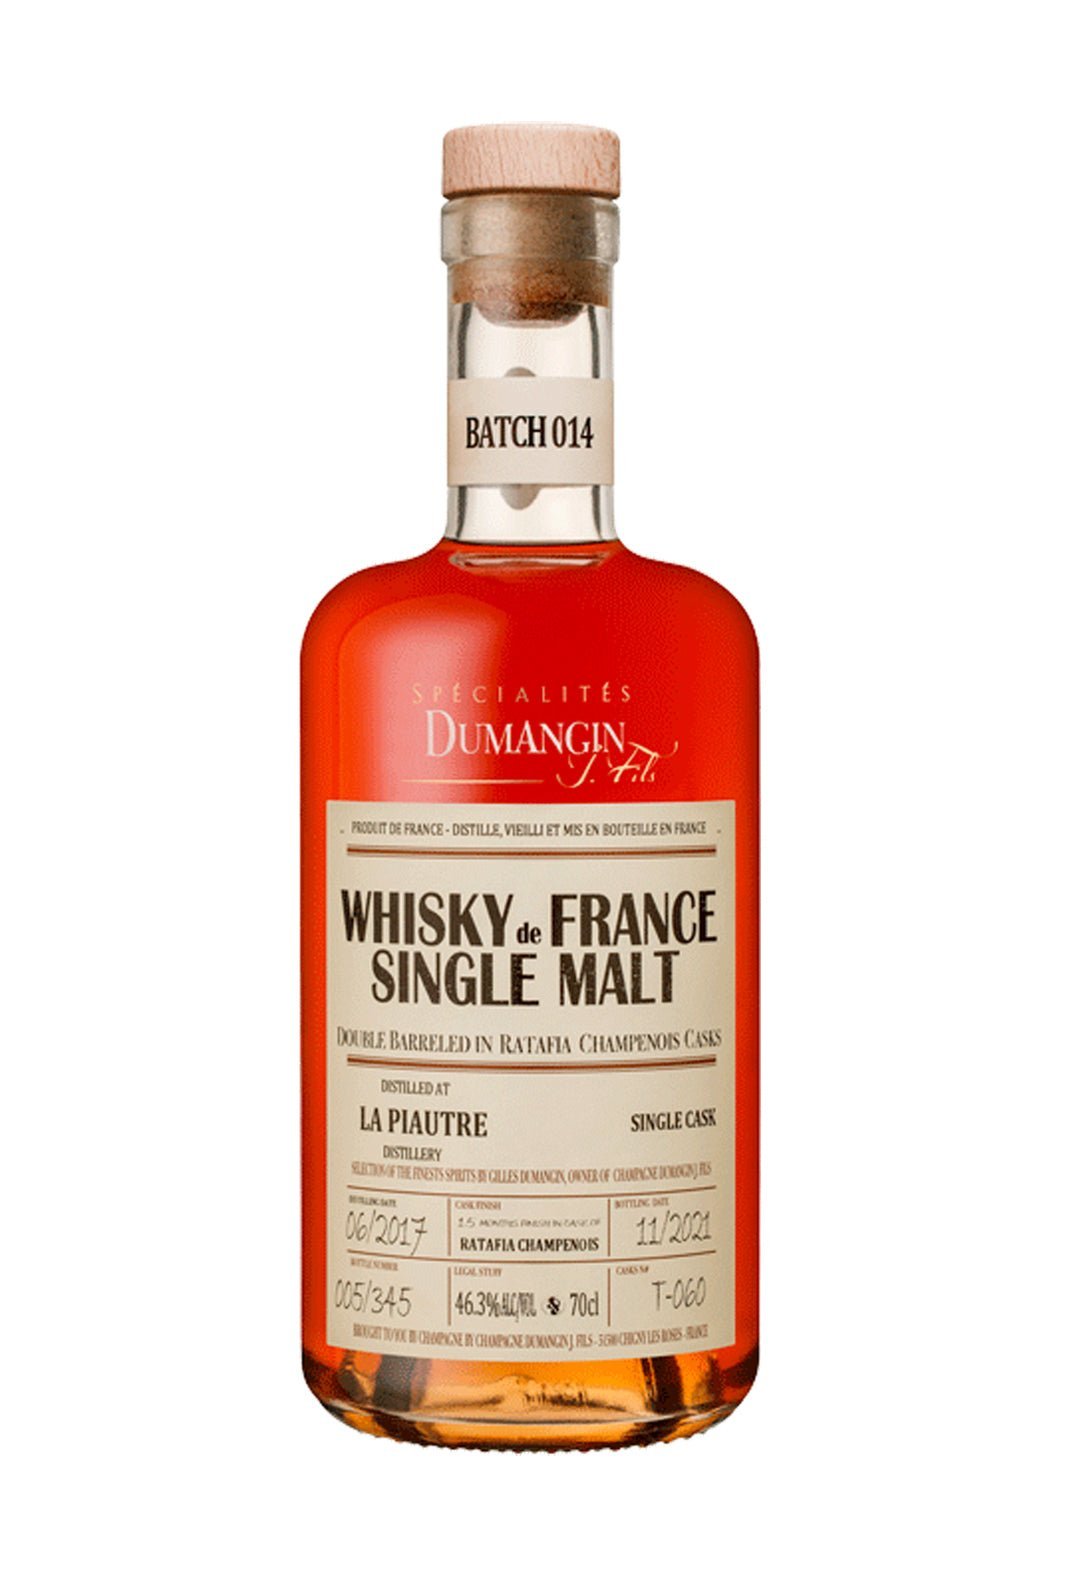 Dumangin Batch 014 La Piautre (France) 2017 Single Malt Whisky 46.3% 700ml | Whiskey | Shop online at Spirits of France